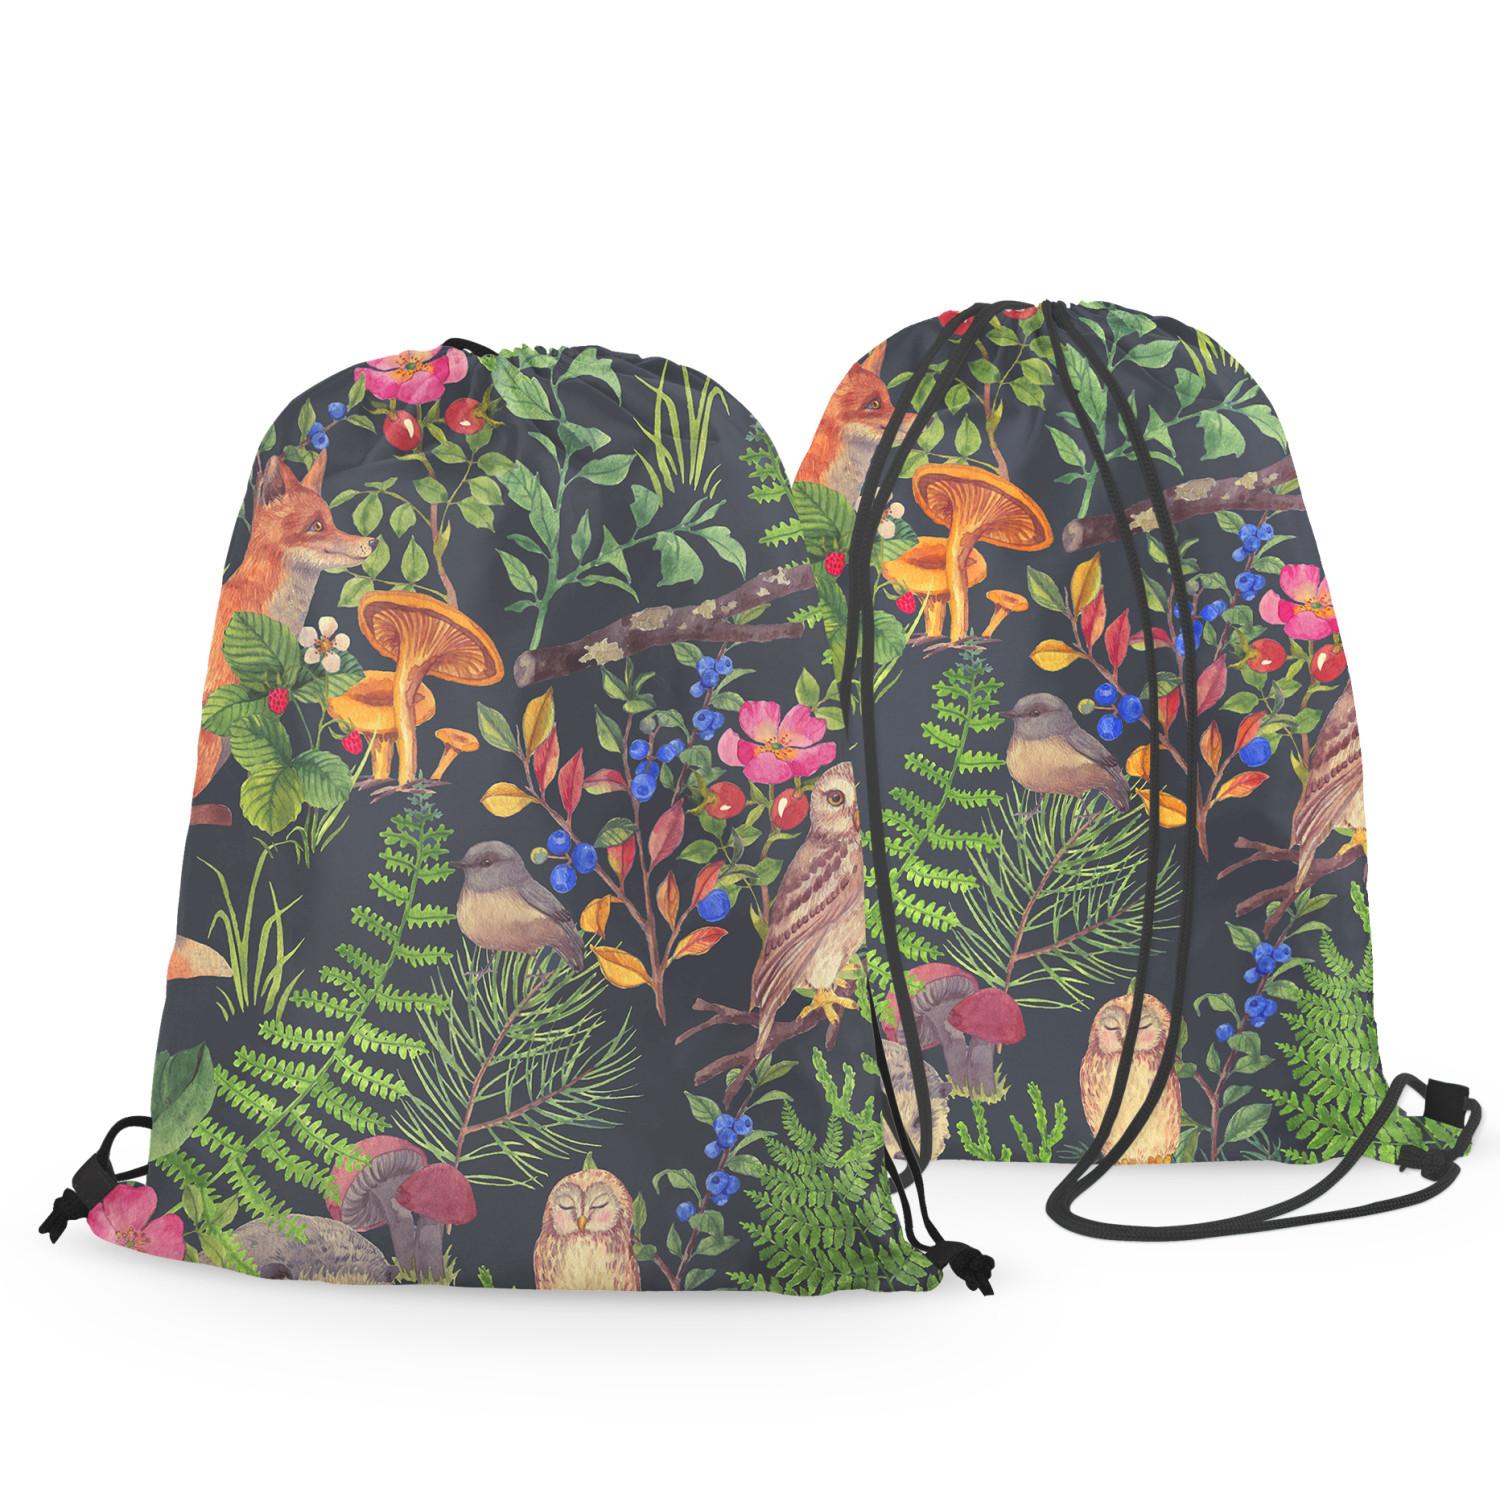 Backpack Good neighbourhood - forest flora and fauna motif on black background